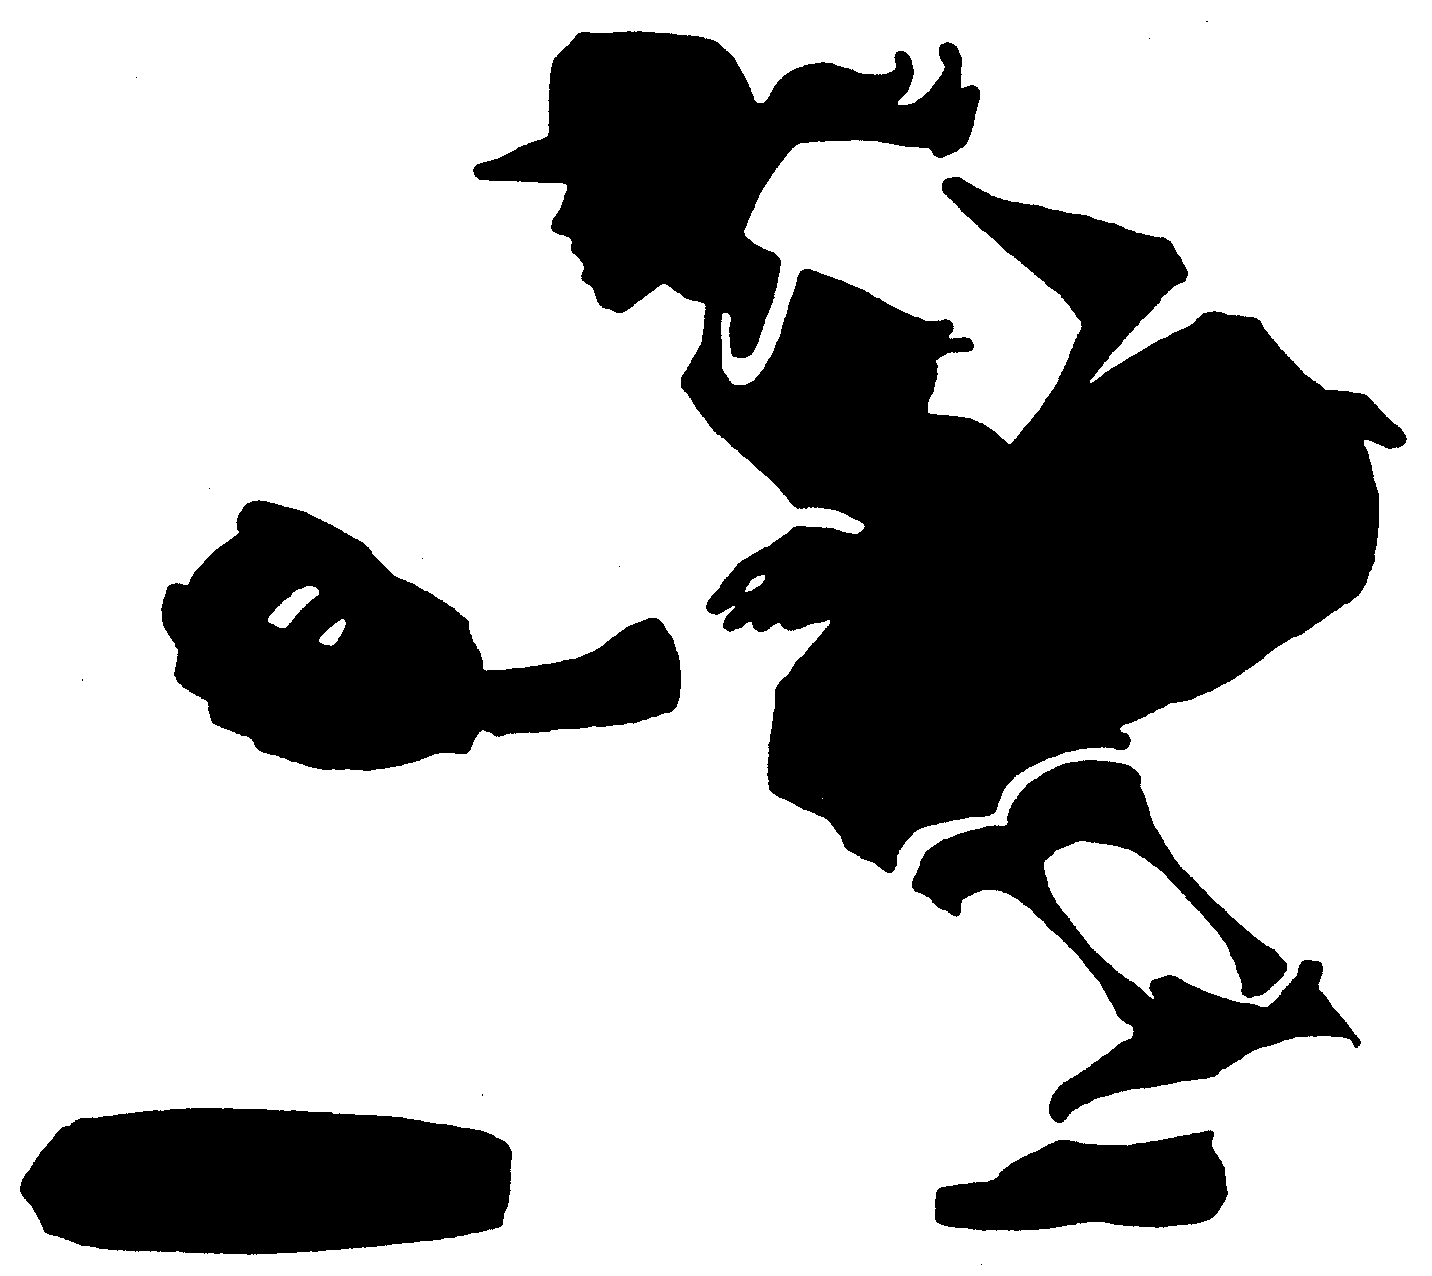 Softball player silhouette clipart